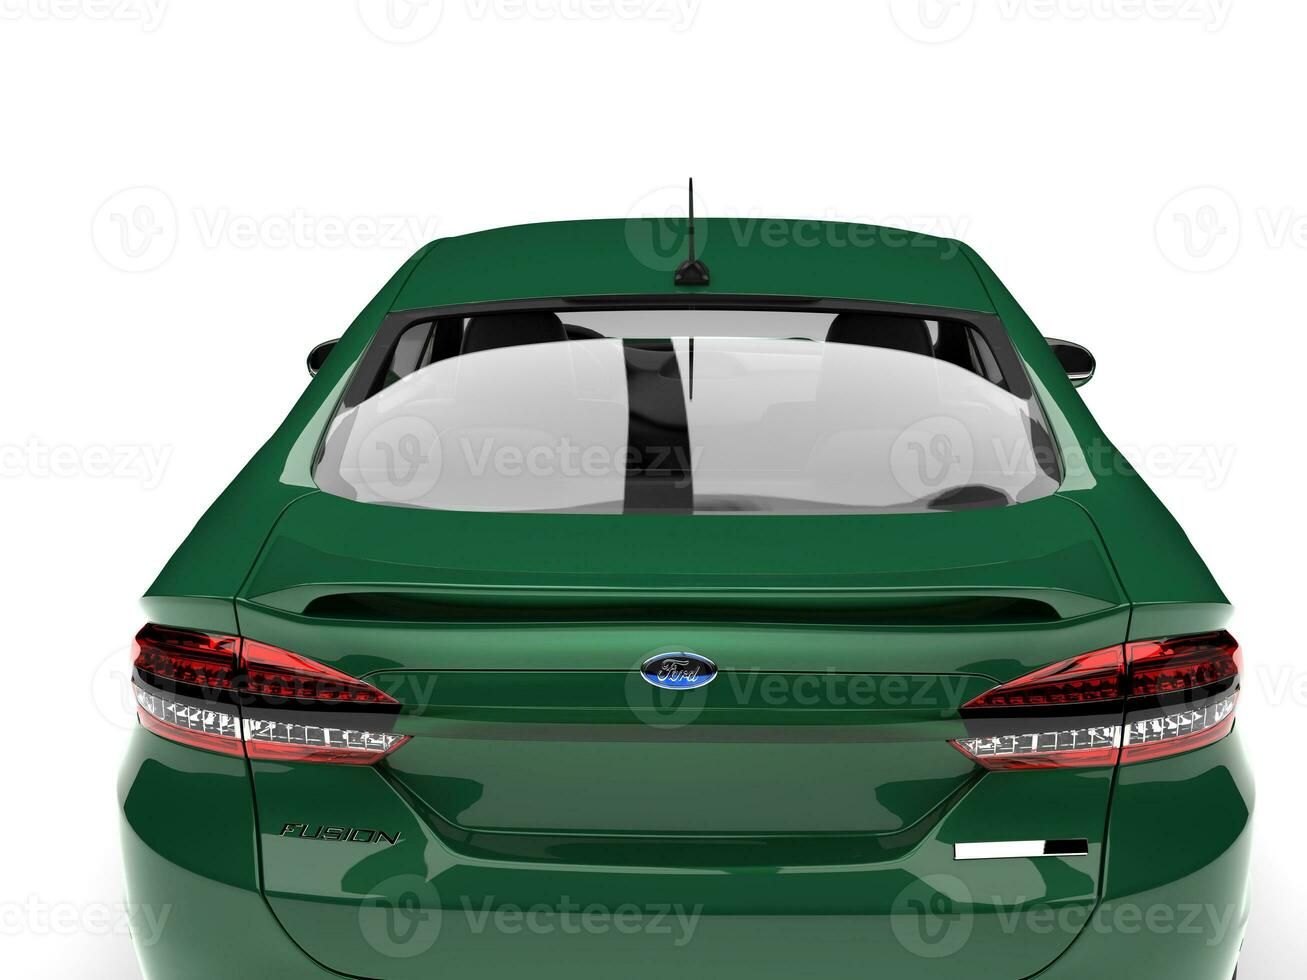 Dark green Ford Mondeo 2015 - 2018 model - back view - 3D Illustration - on white background photo